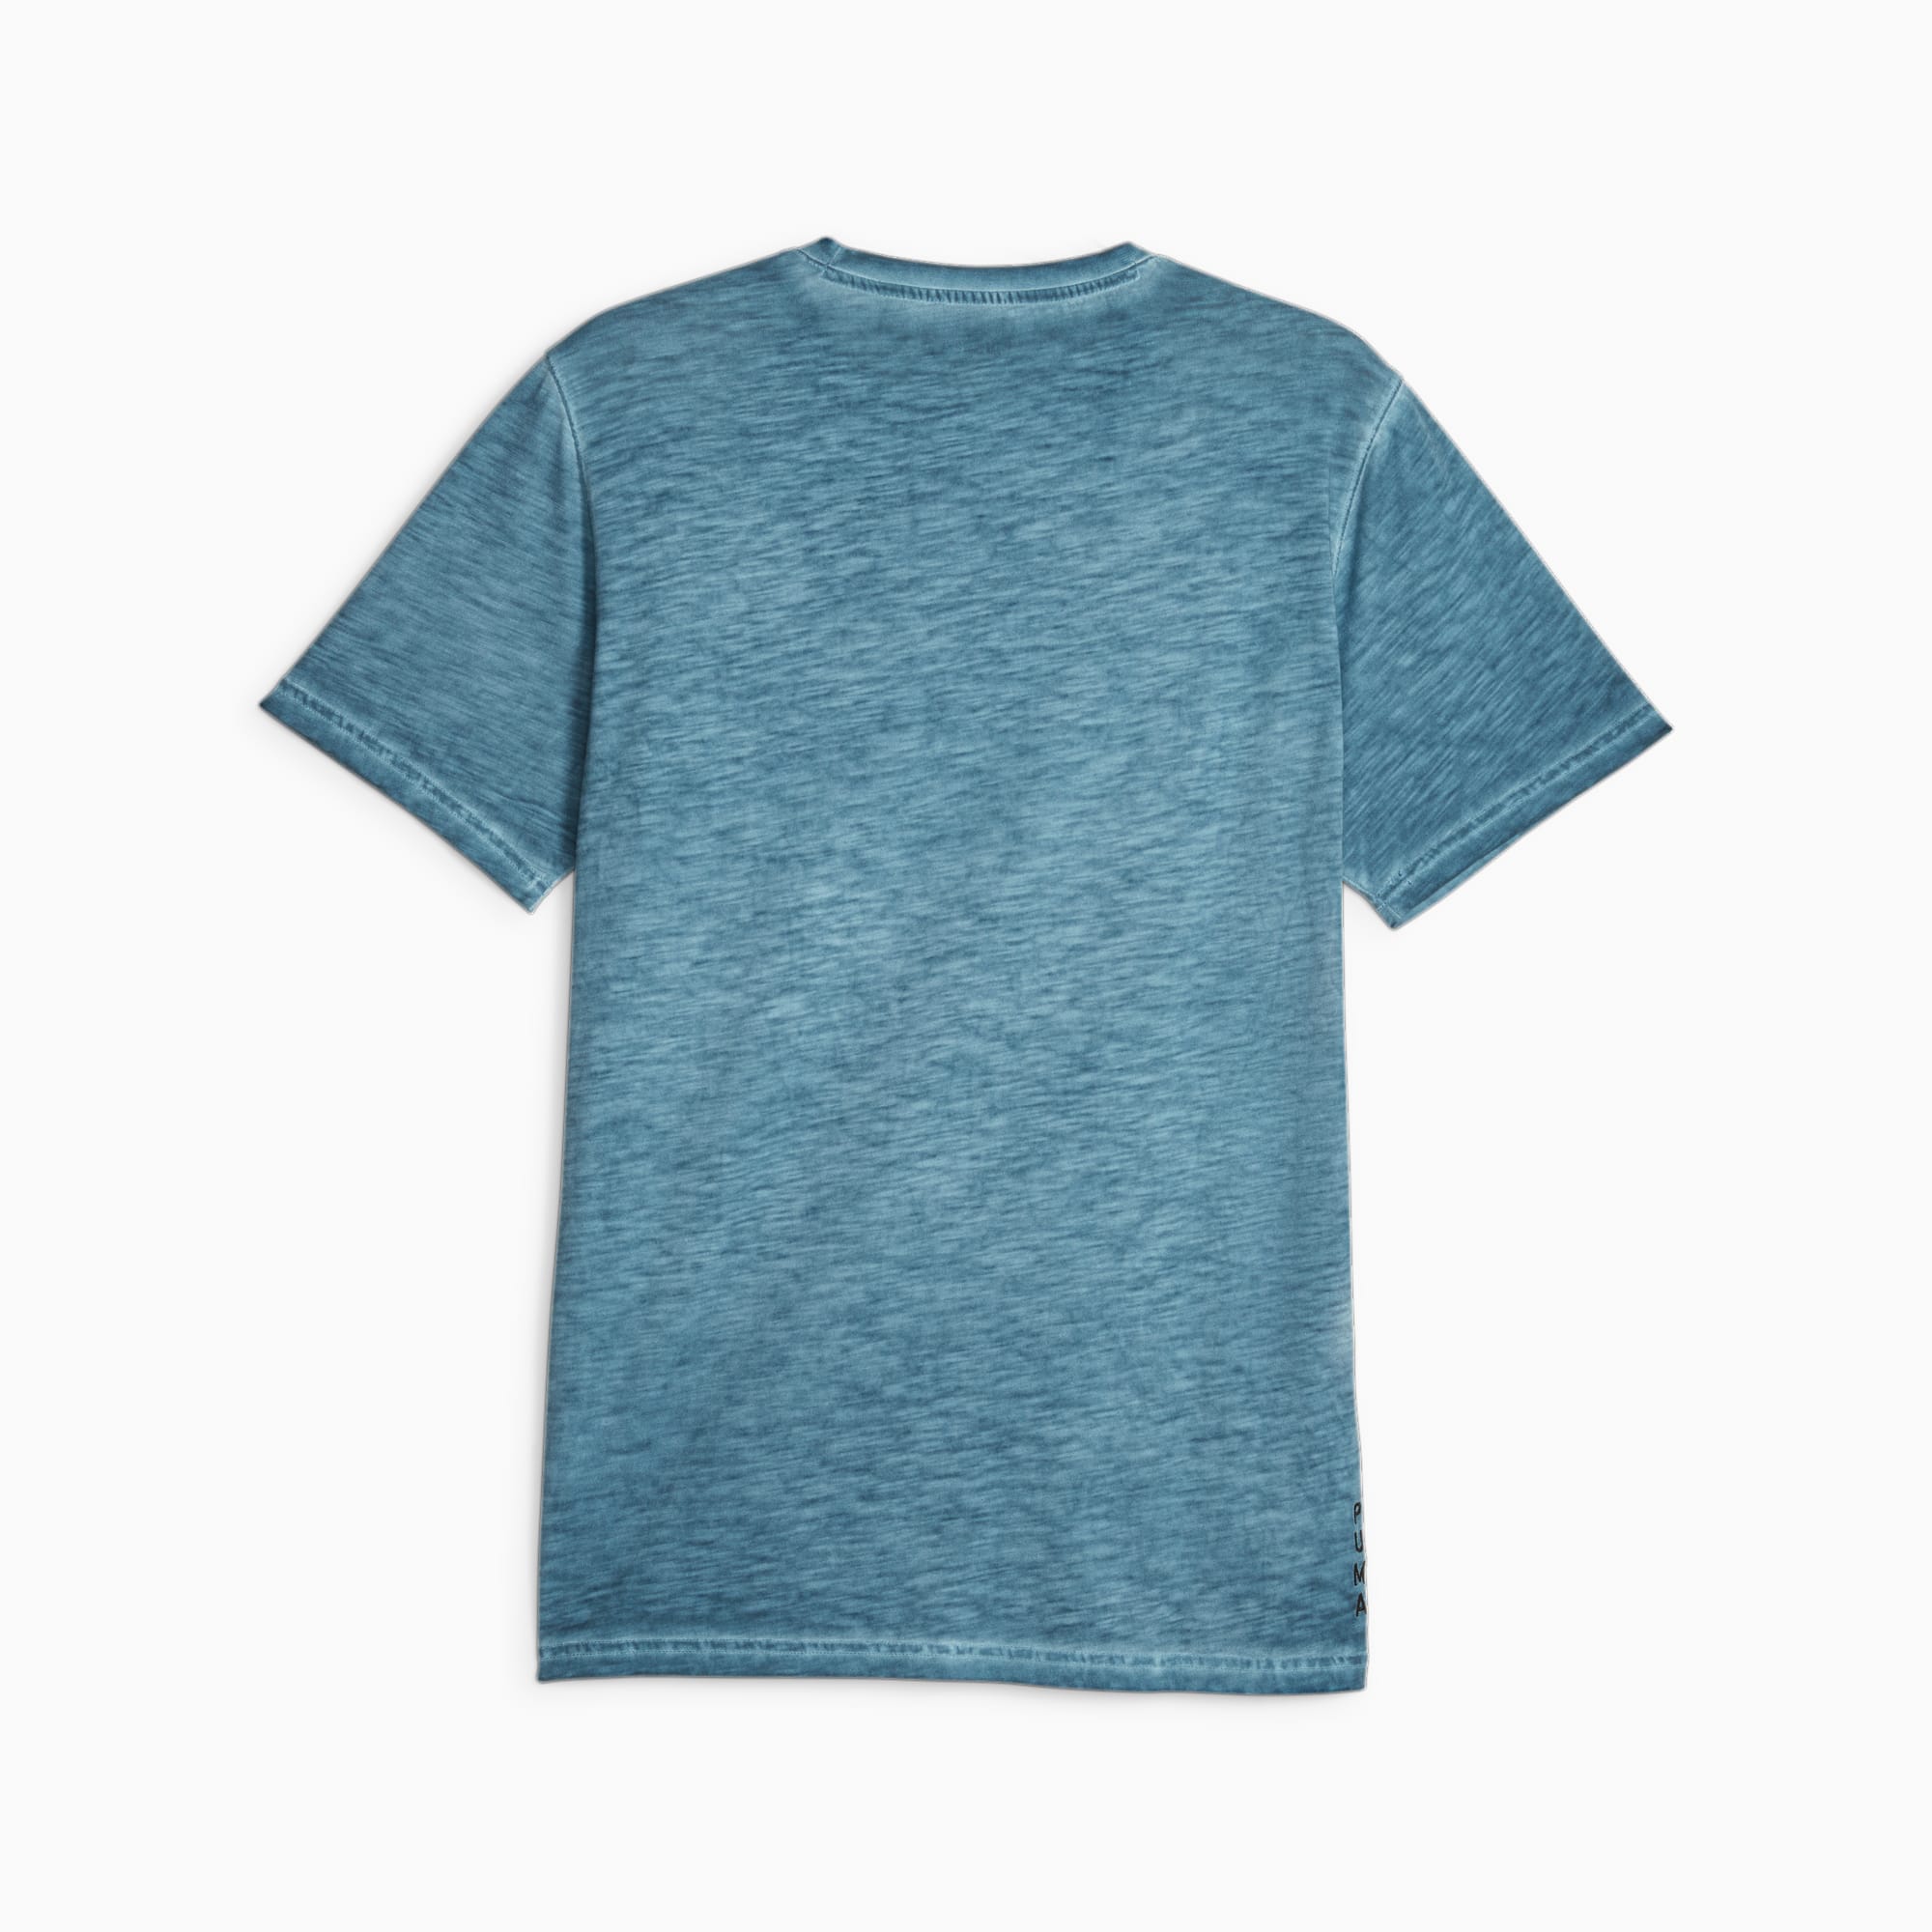 PUMA Studio Foundation Wash Trainings-T-shirt Voor Heren, Blauw